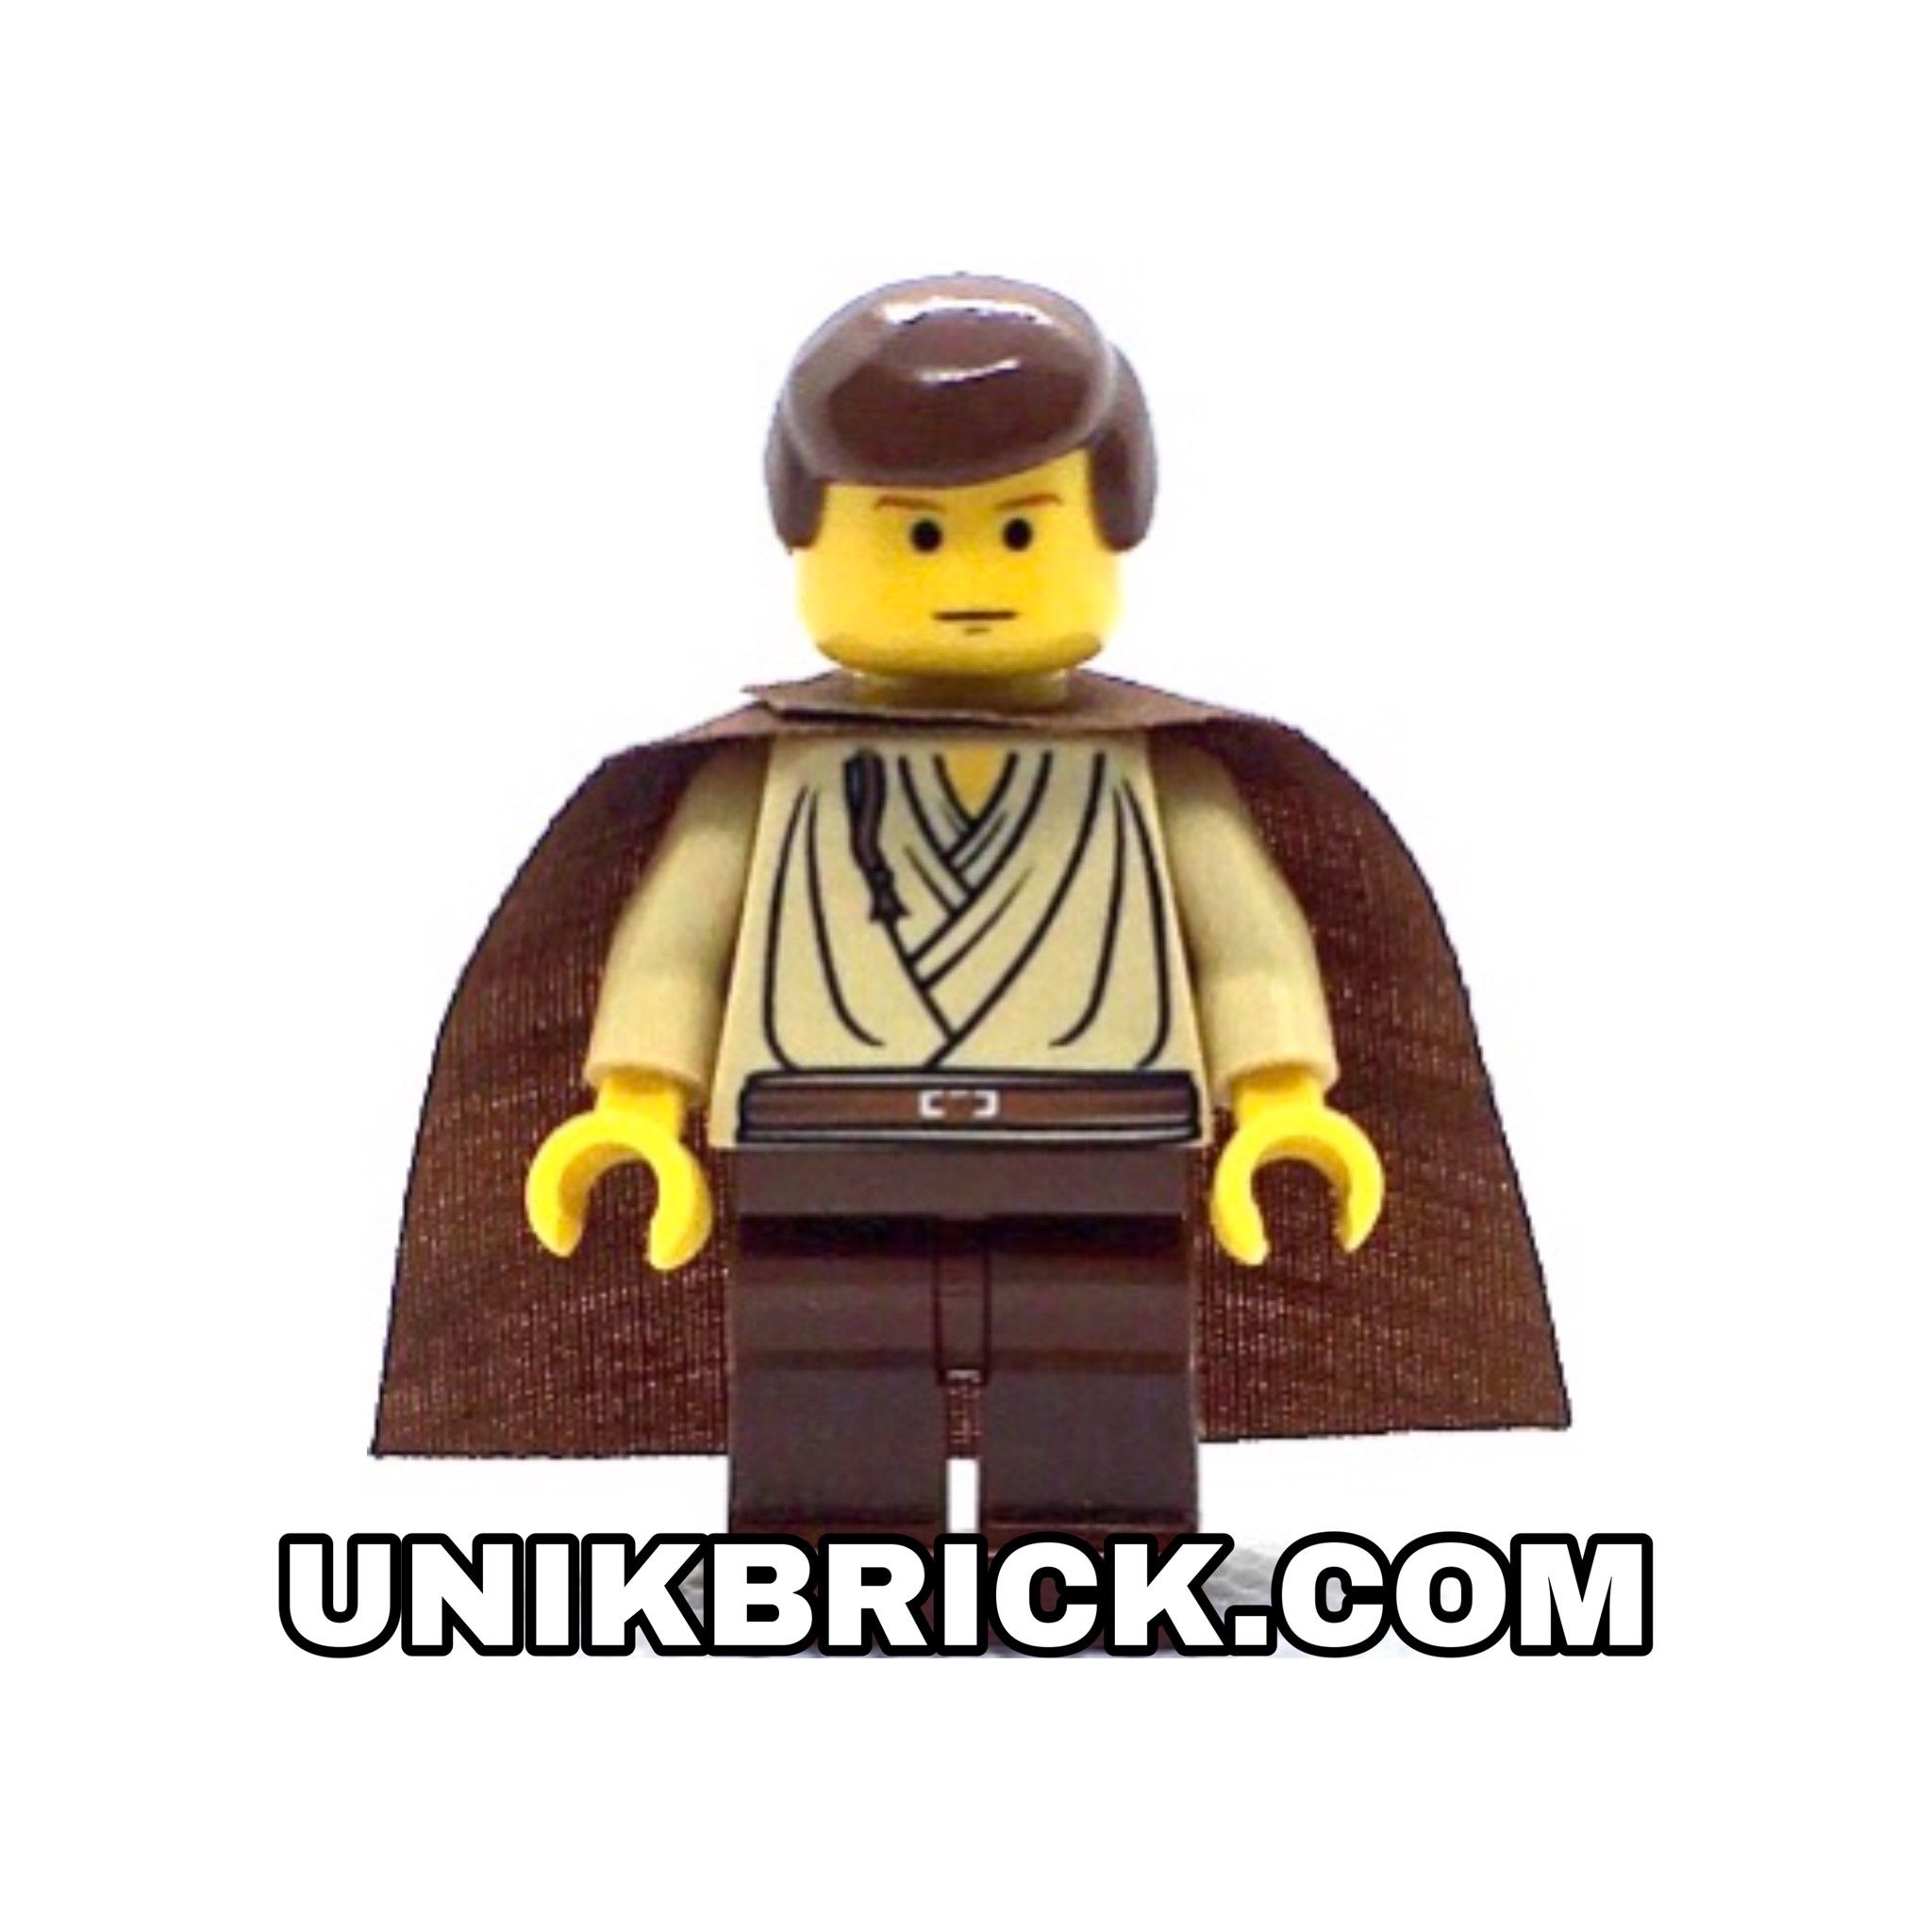 [ORDER ITEMS] LEGO Obi-Wan Kenobi Young with Padawan Braid Pattern